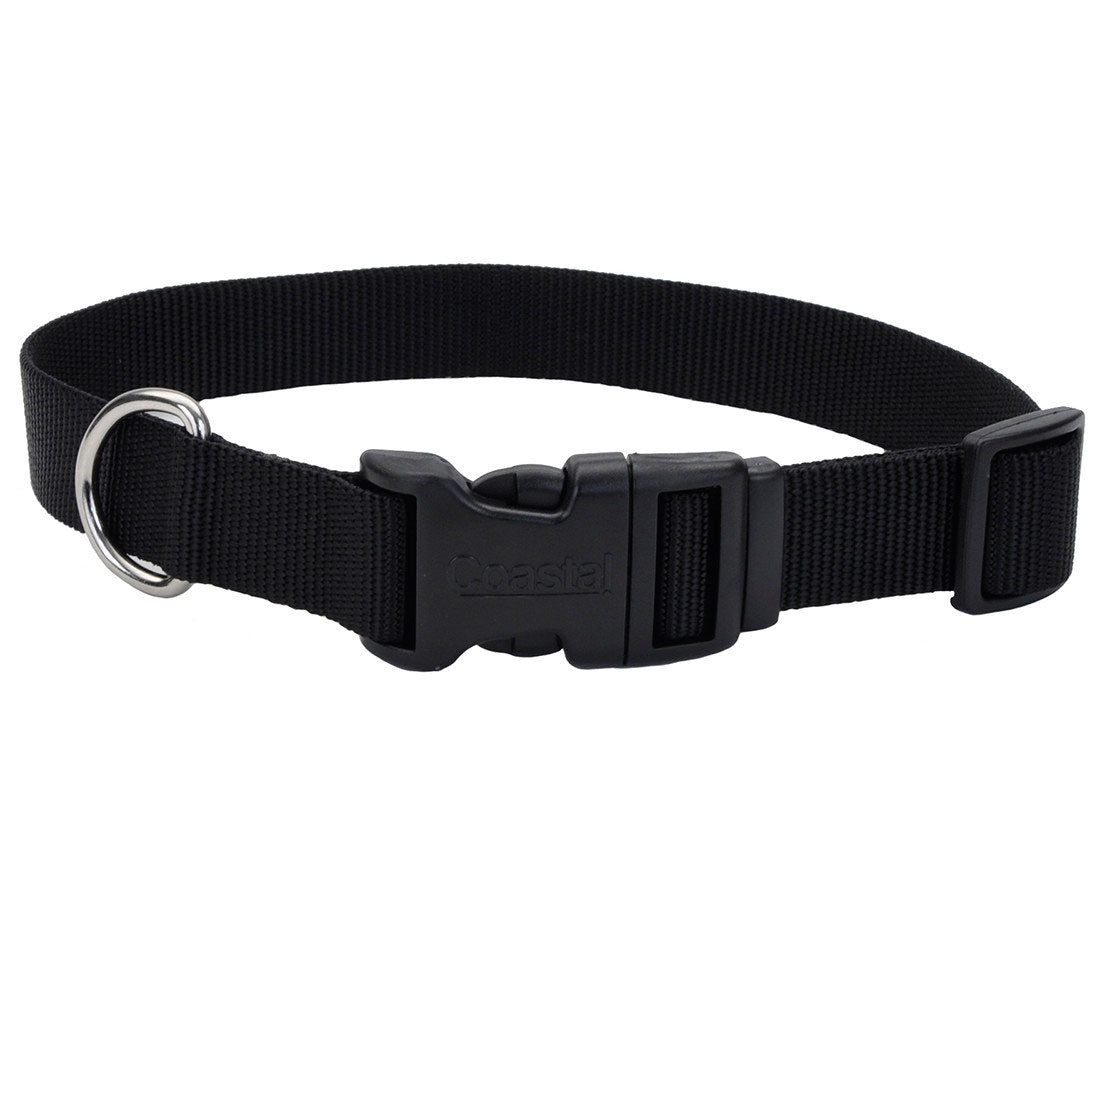 Coastal Adjustable Dog Collar with Plastic Buckle, Black - 1In x 18 - 26In